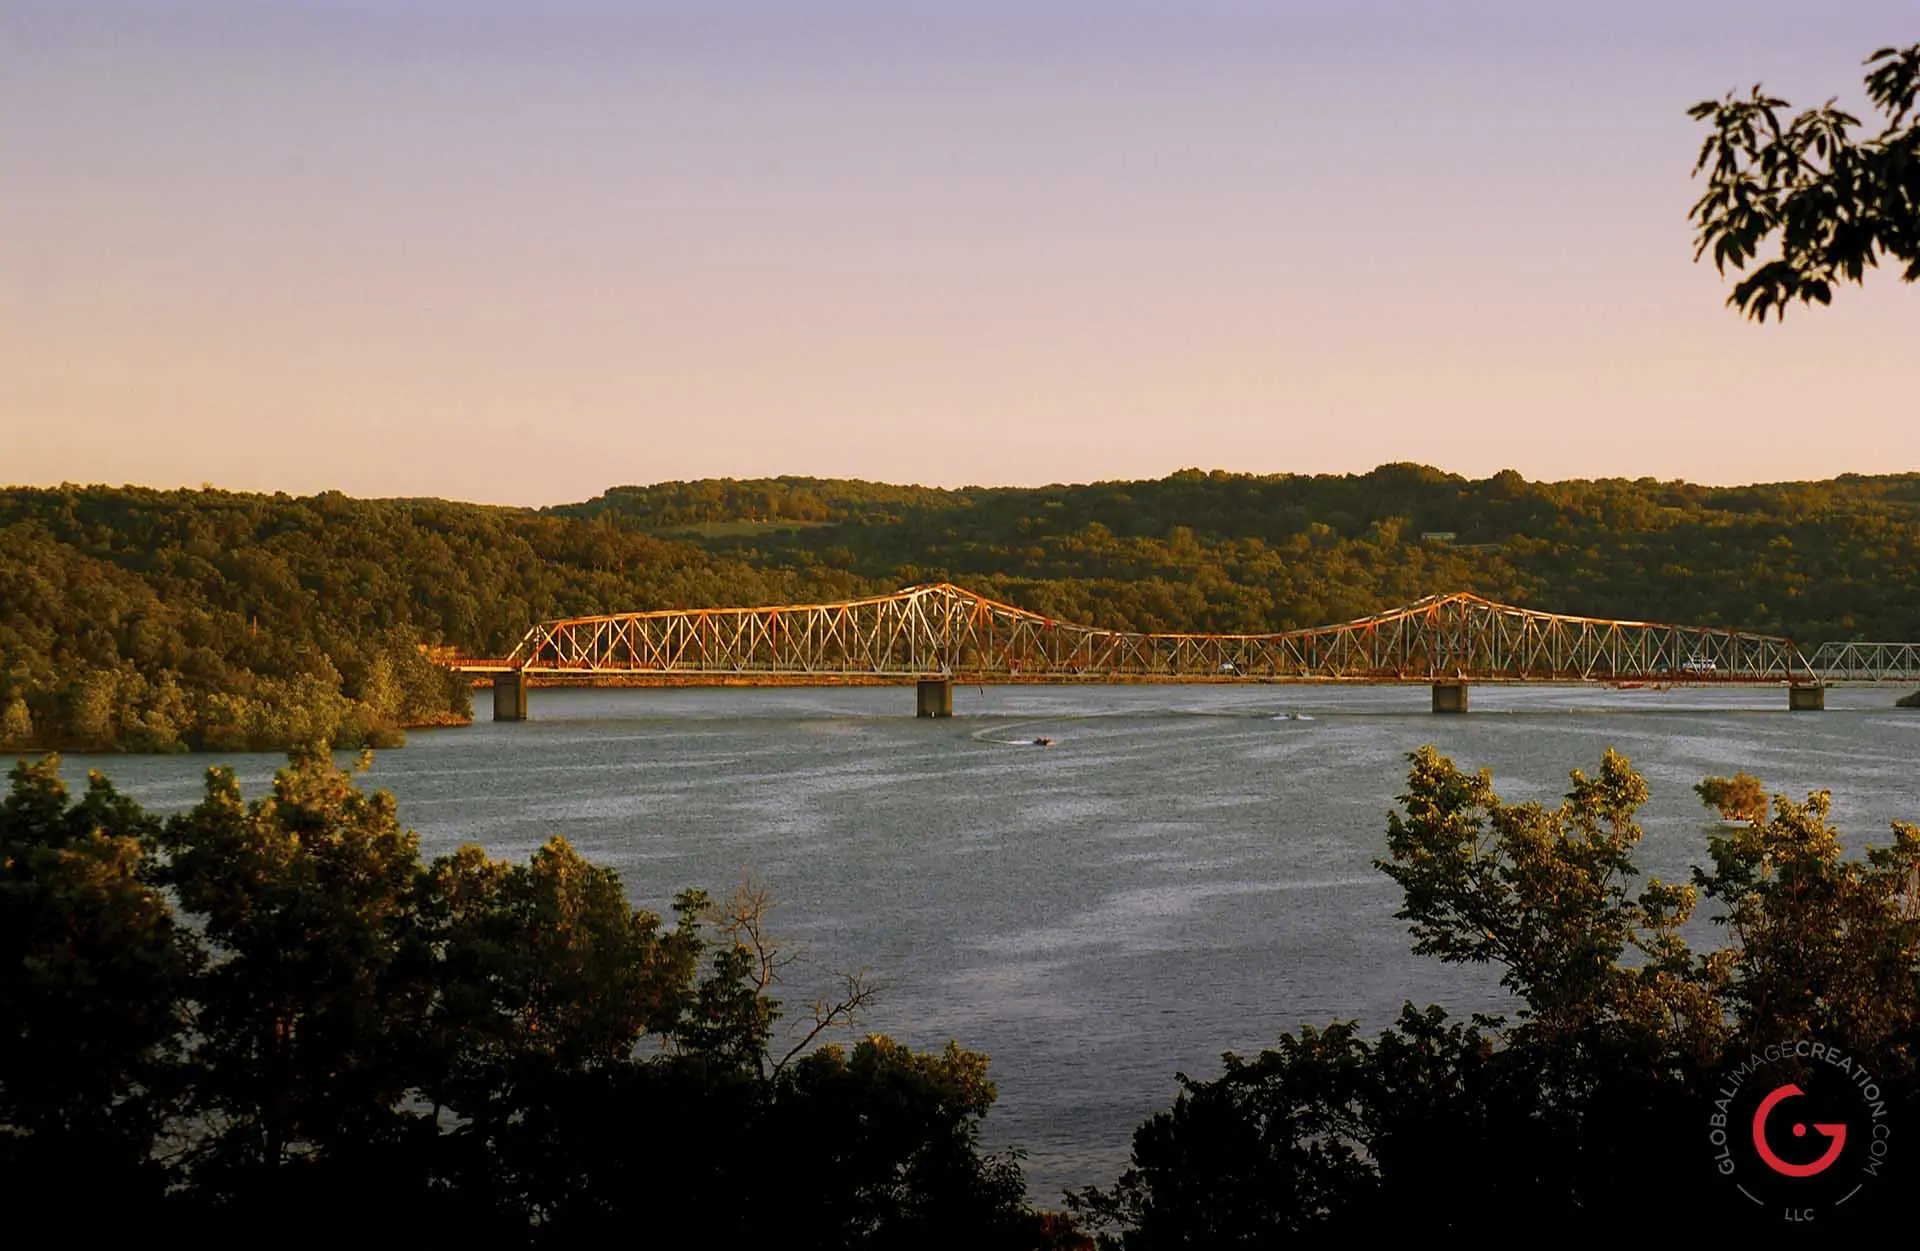 Sun sets on hwy 86 Bridge over table rock lake. - Advertising photographers in Branson Missouri, Branson Missouri photography